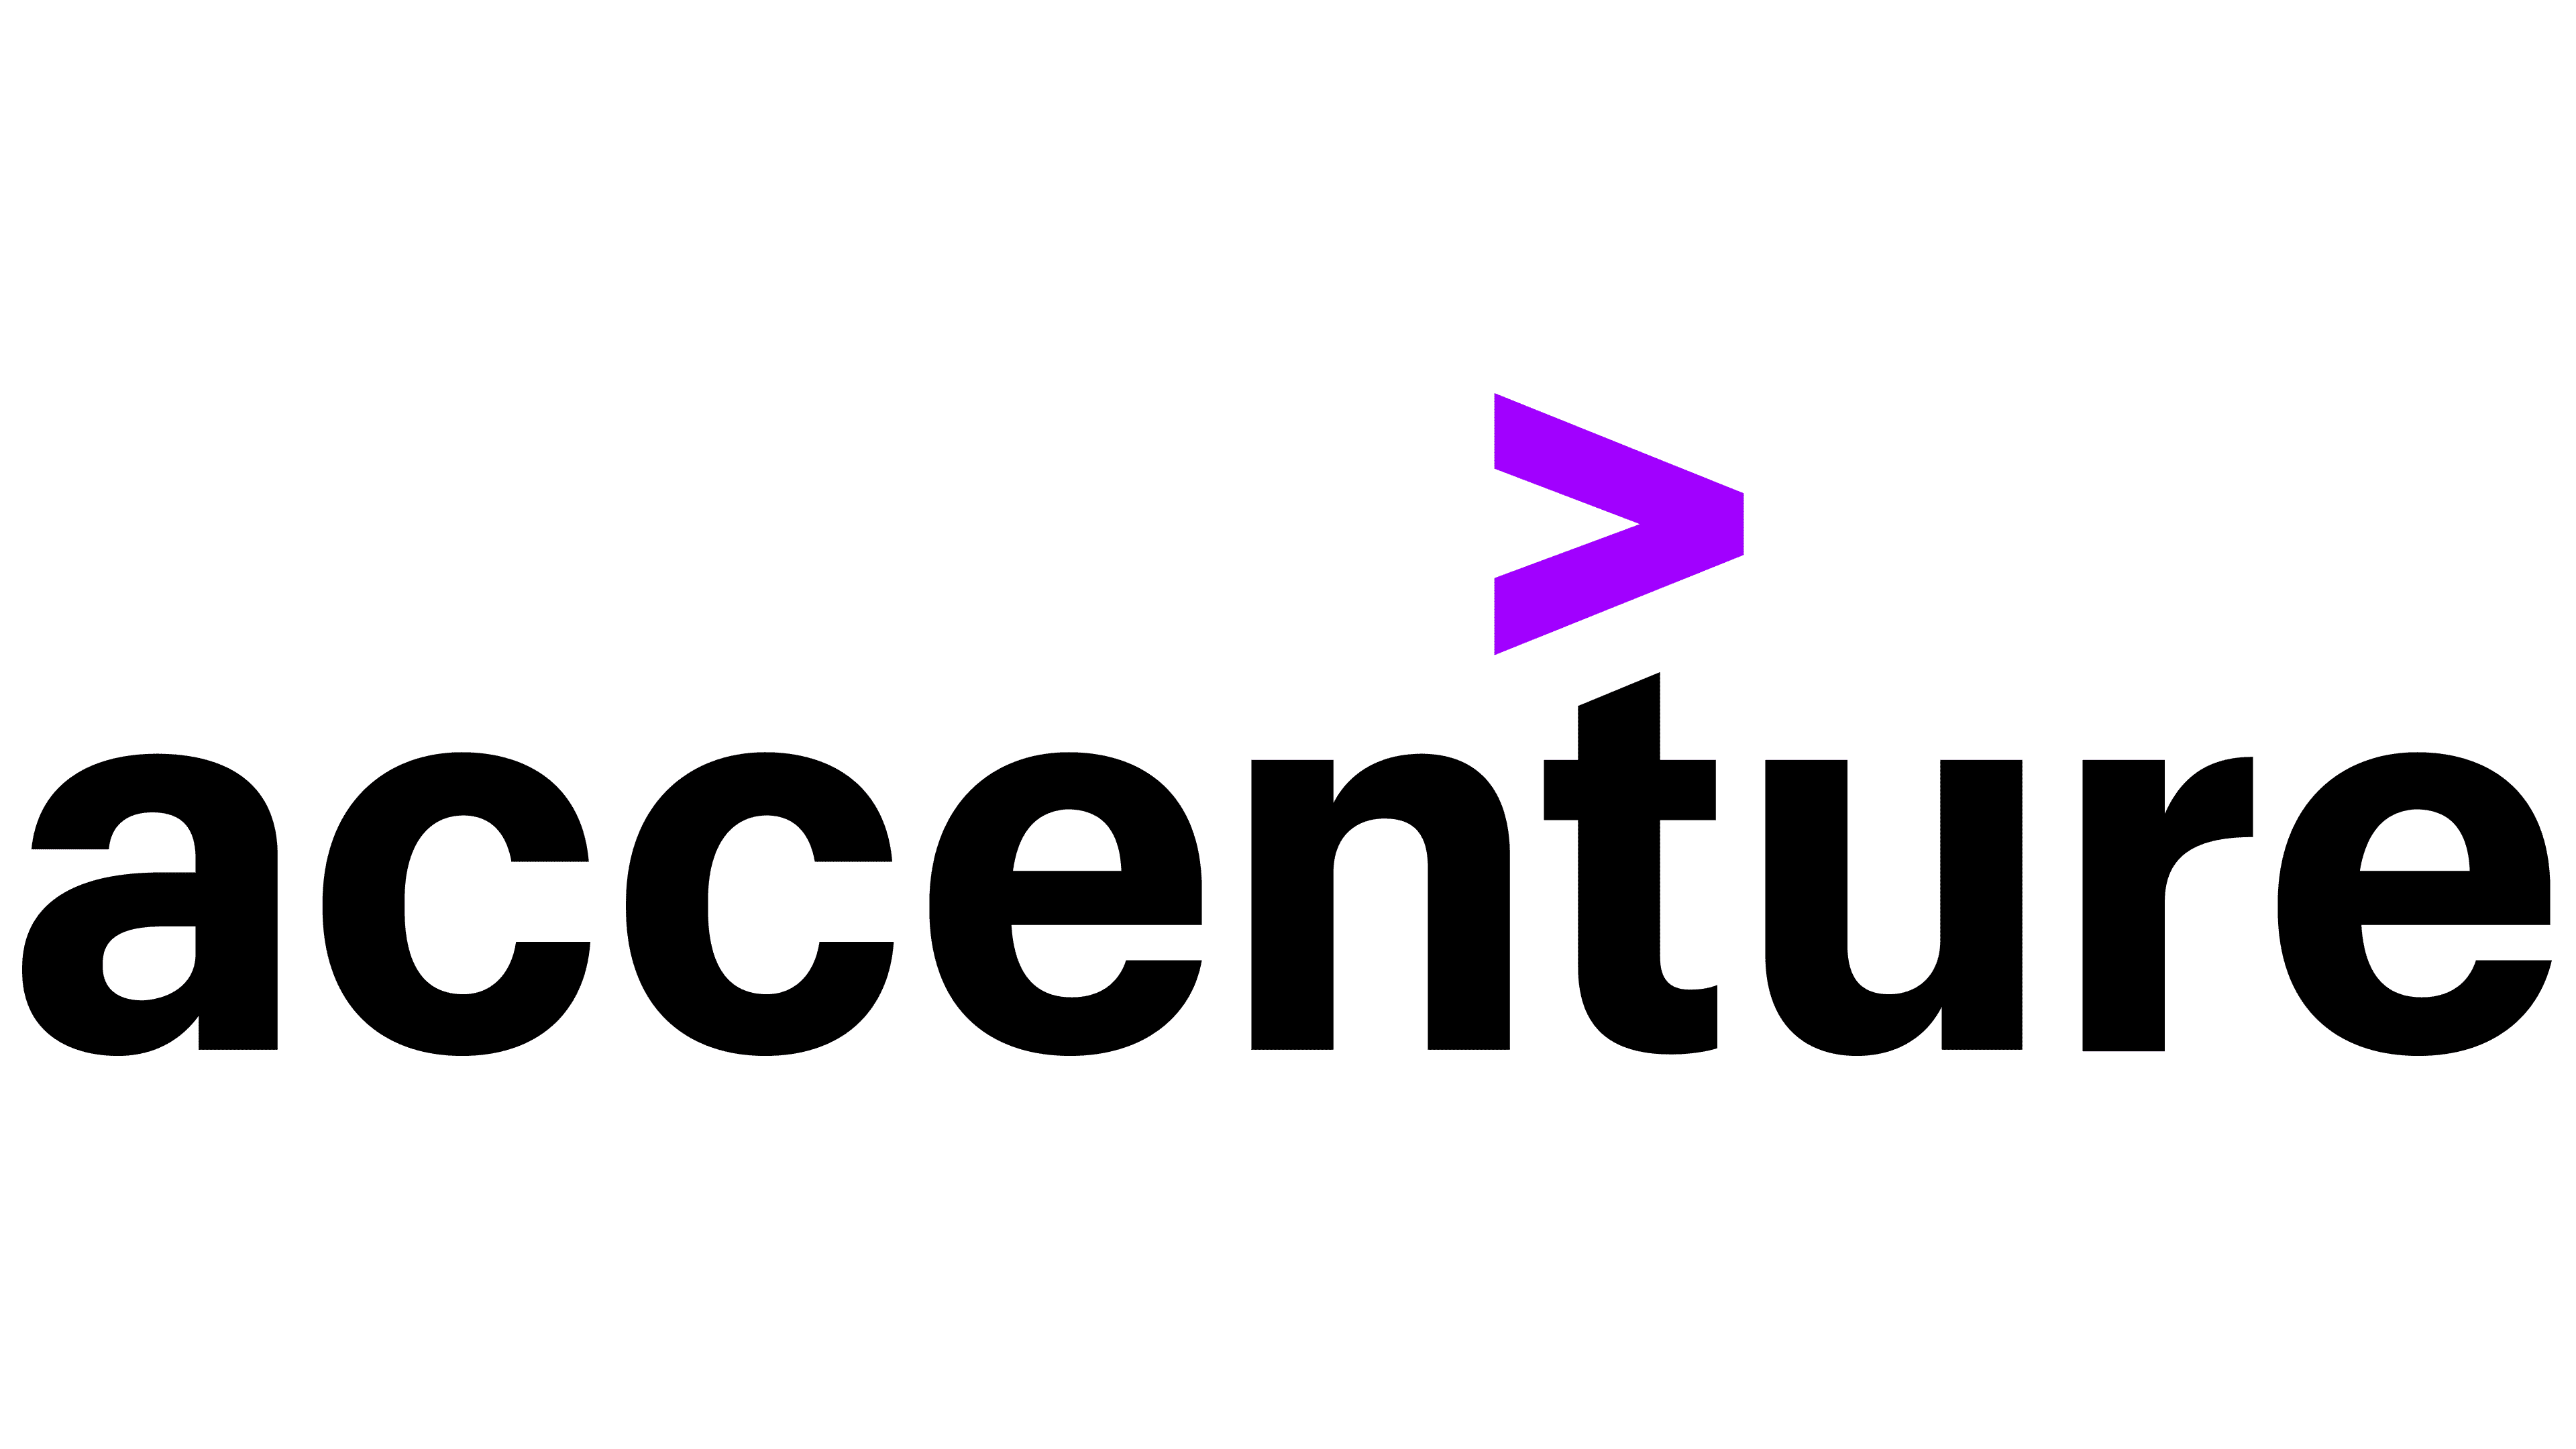 Accenture logo with a purple arrow.